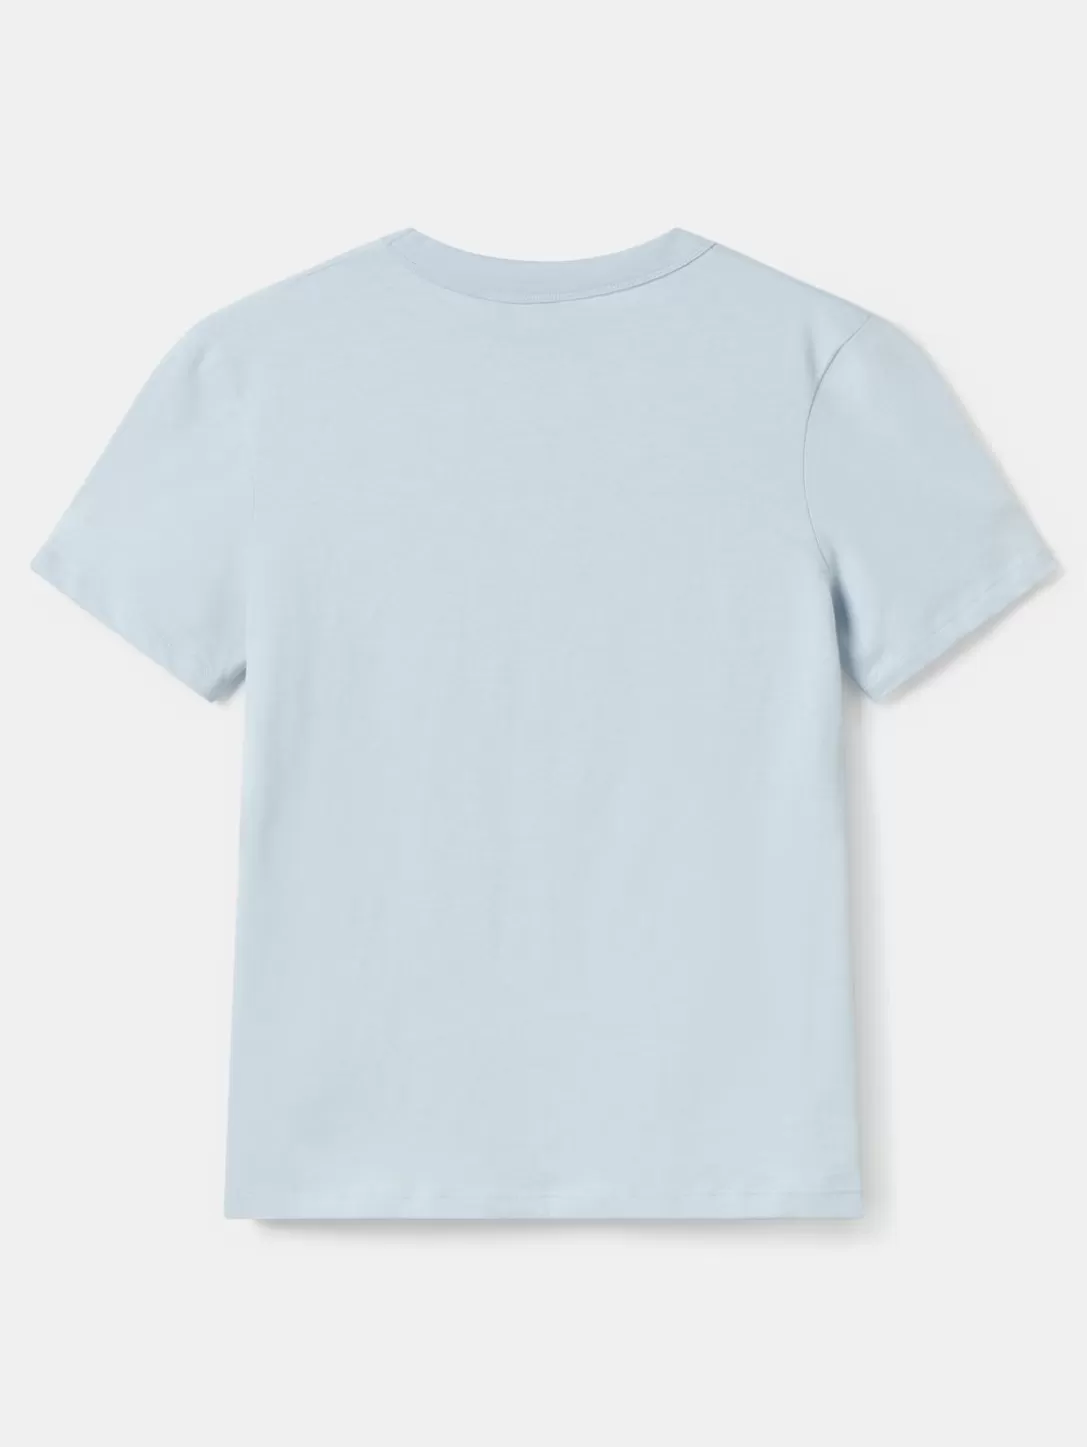 HOFF T-Shirt Cabrera Blue Sale